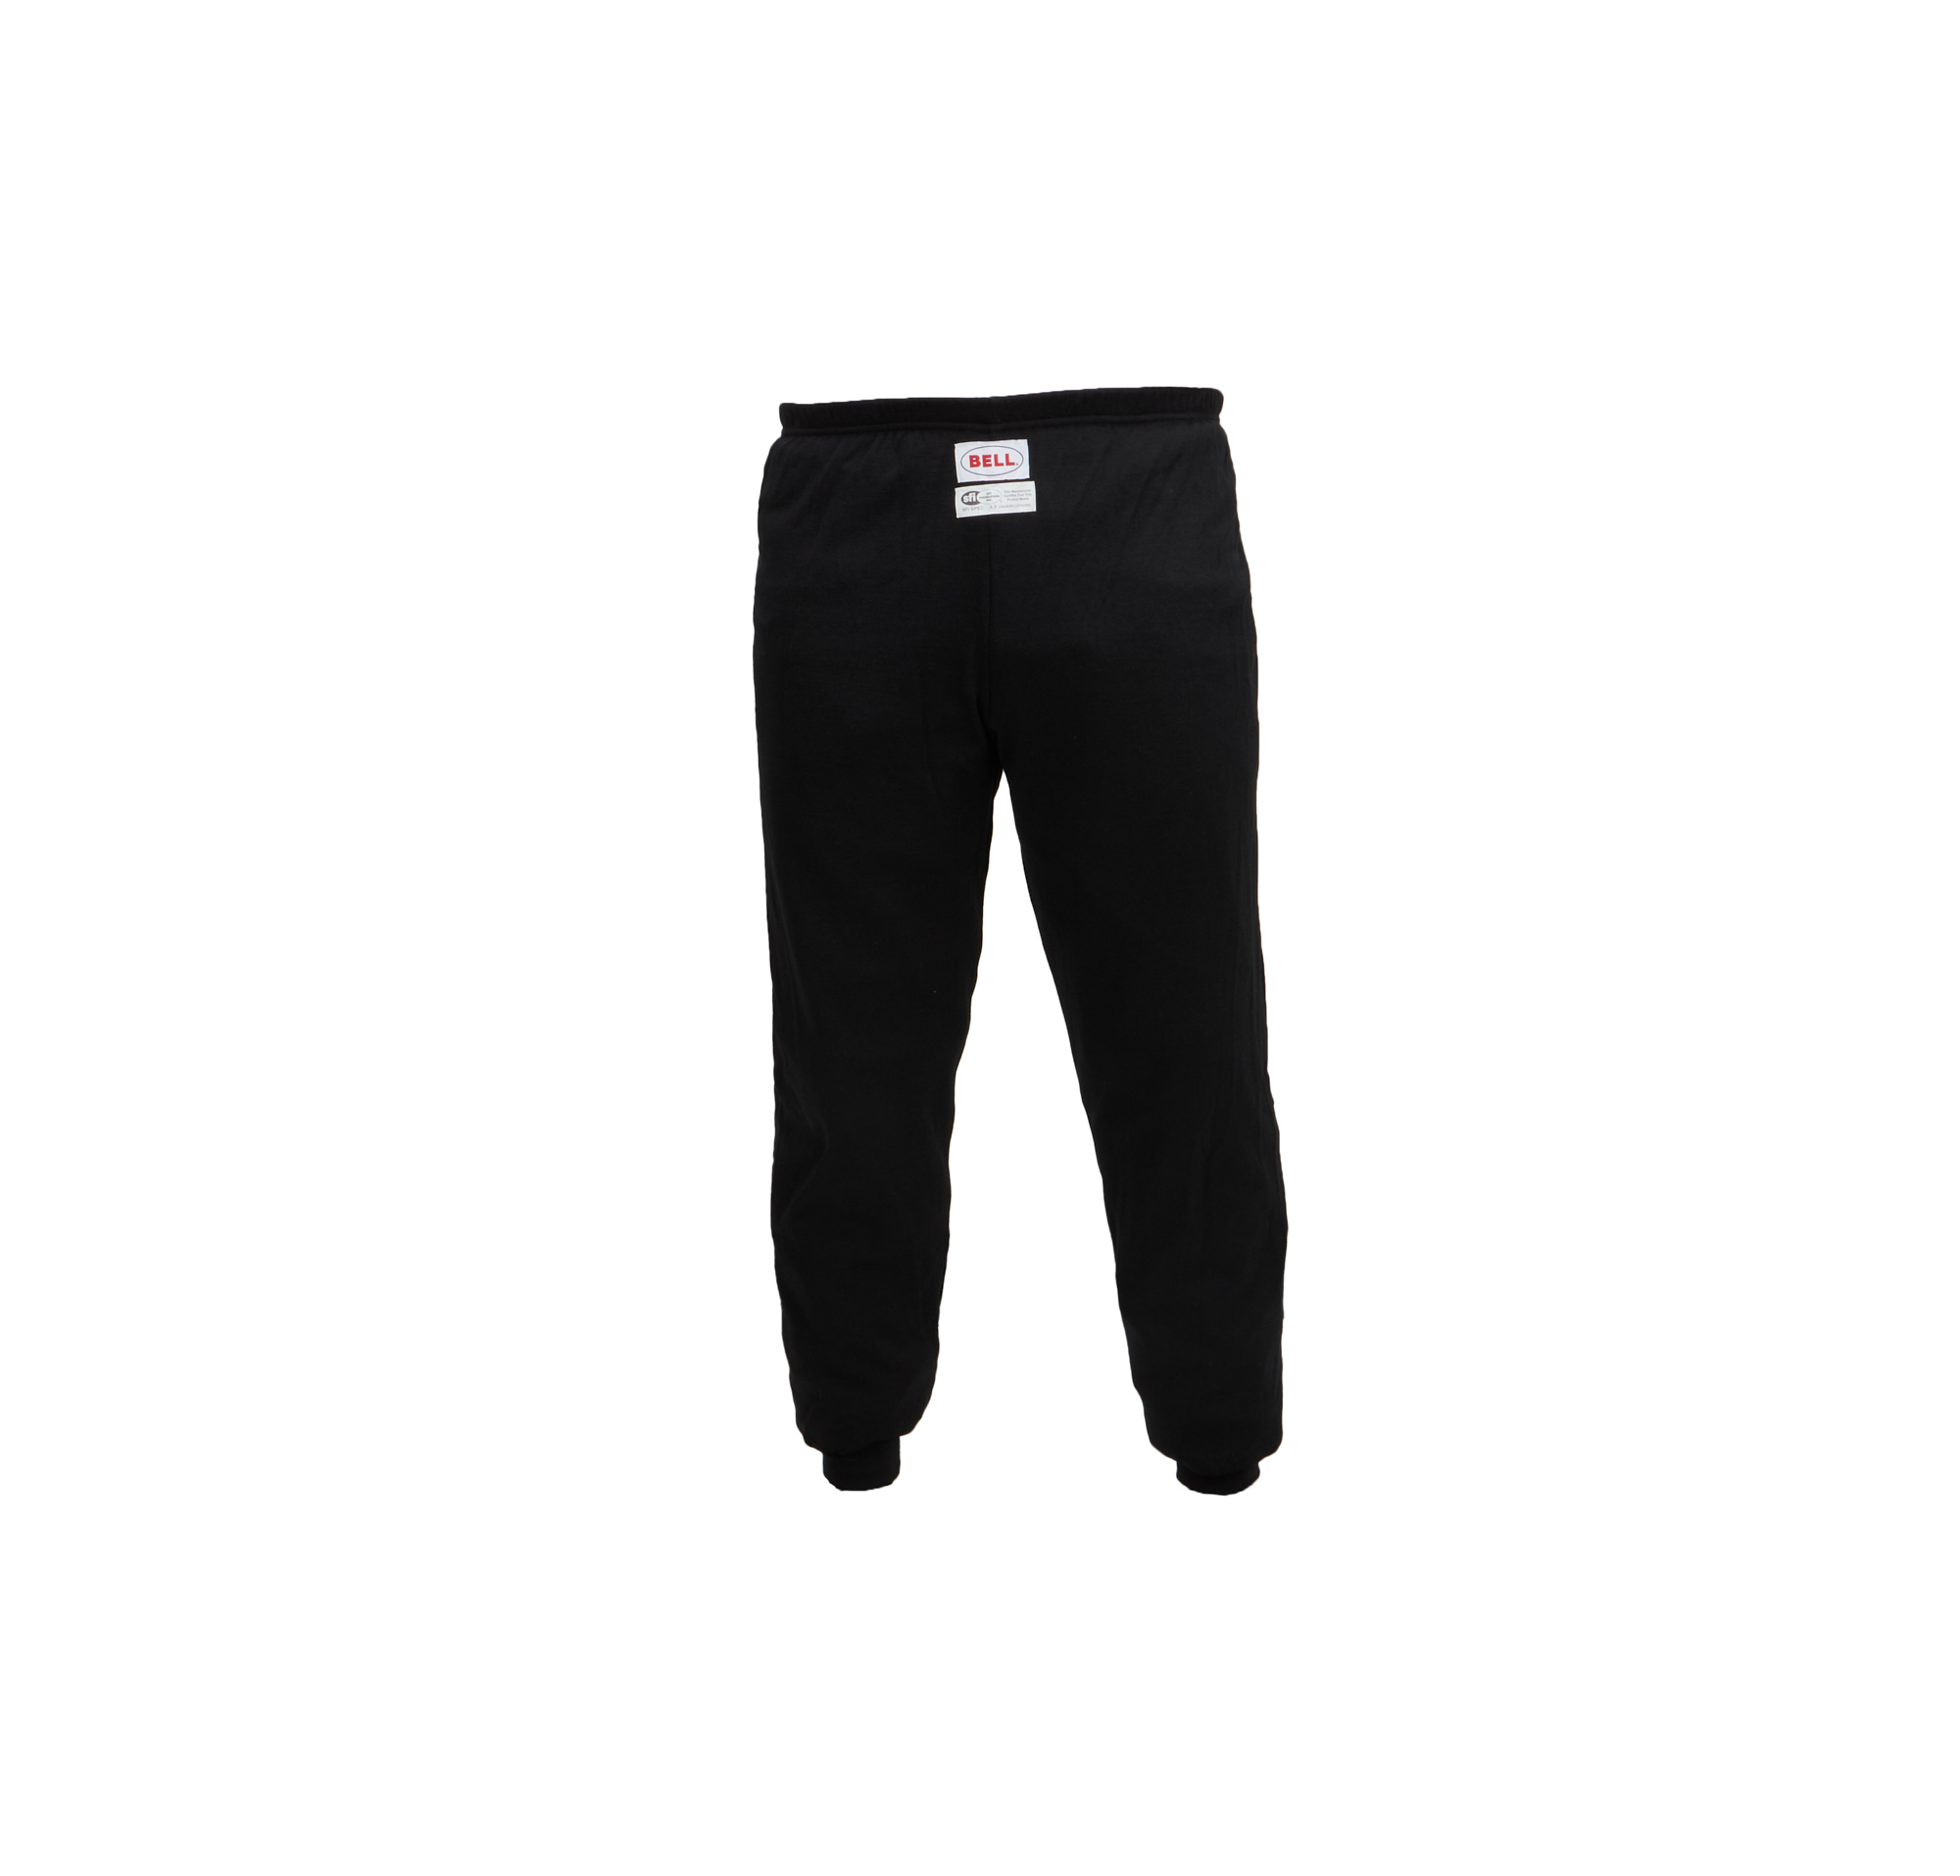 Underwear Bottom SPORT- TX Black Small SFI 3.3/5 - BR40081